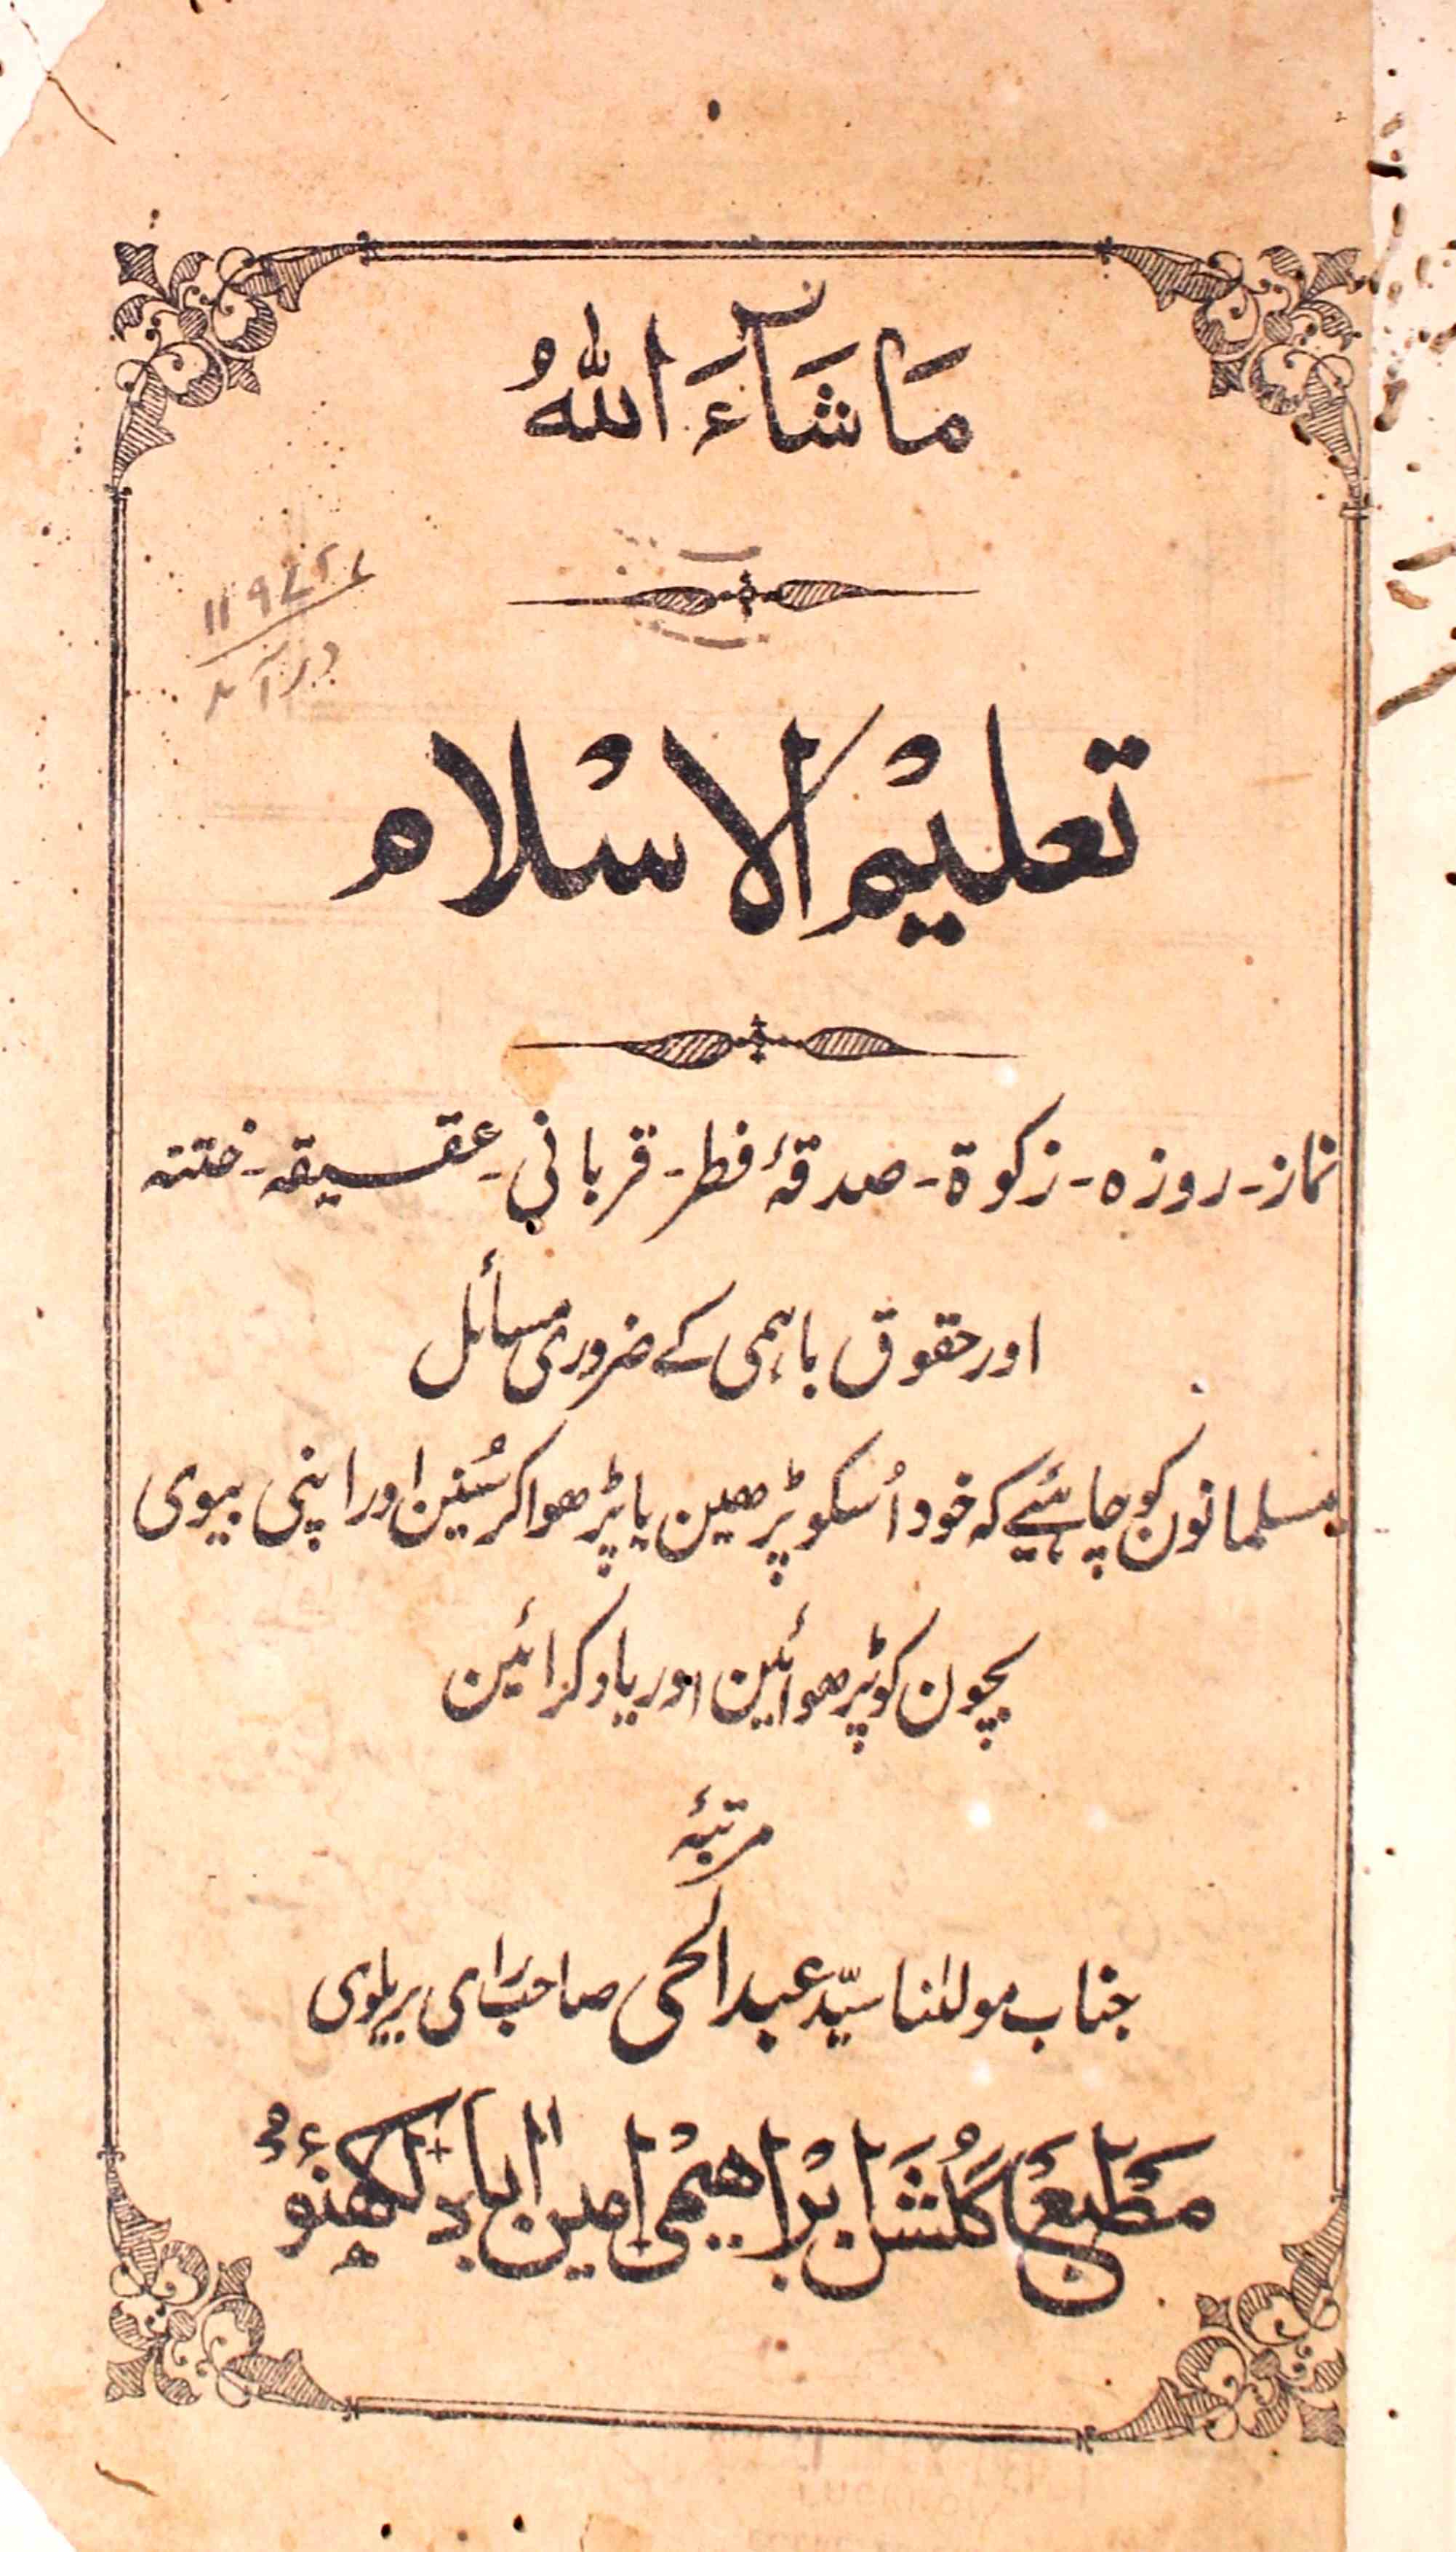 Taleem-ul-Islam